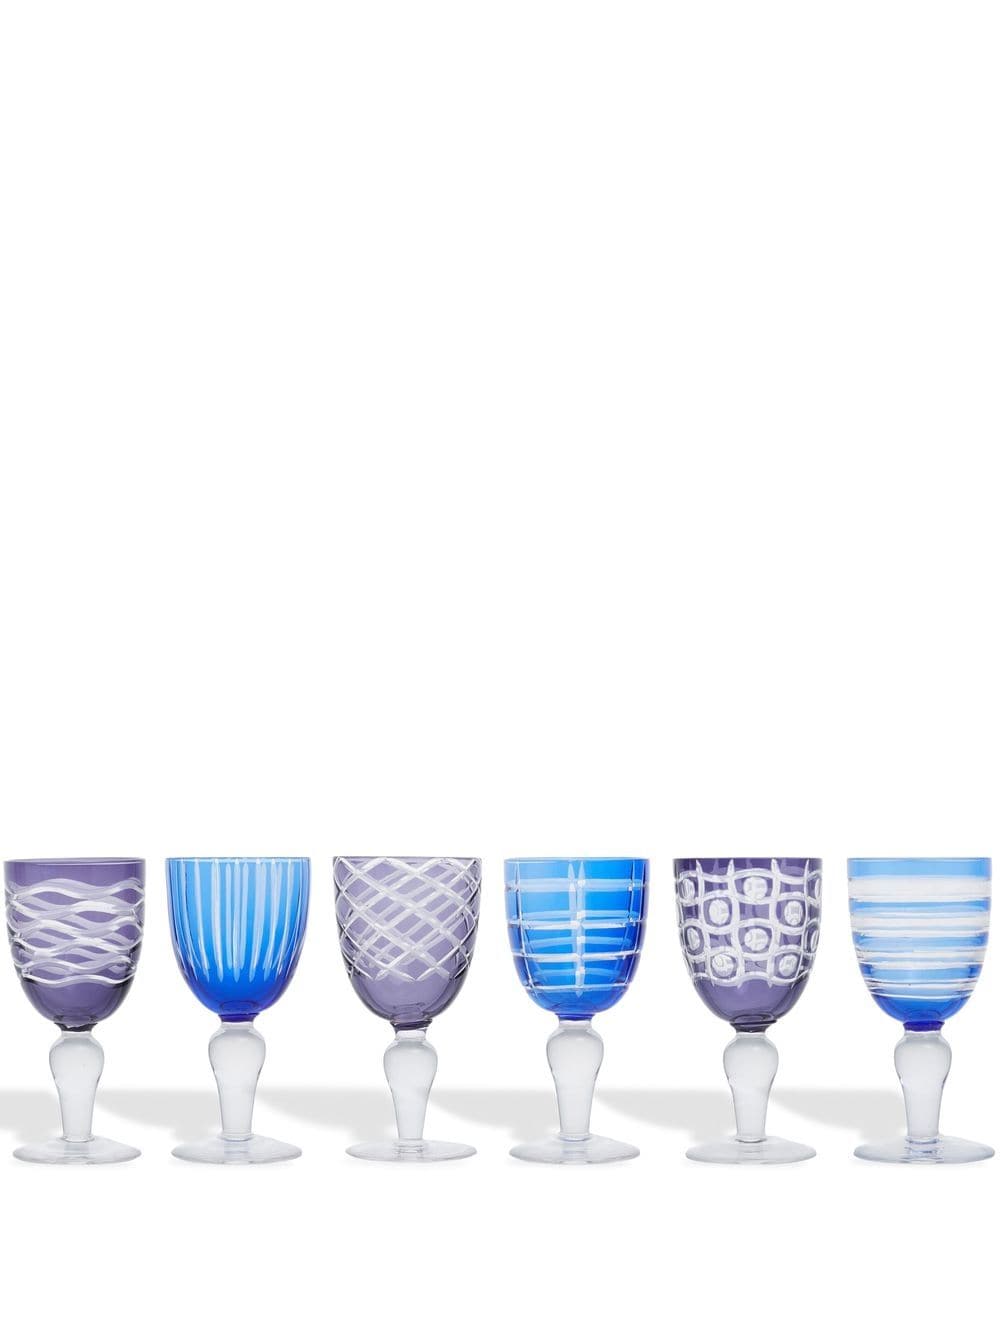 POLSPOTTEN Cobalt wine glasses (set of 6) - Blue von POLSPOTTEN